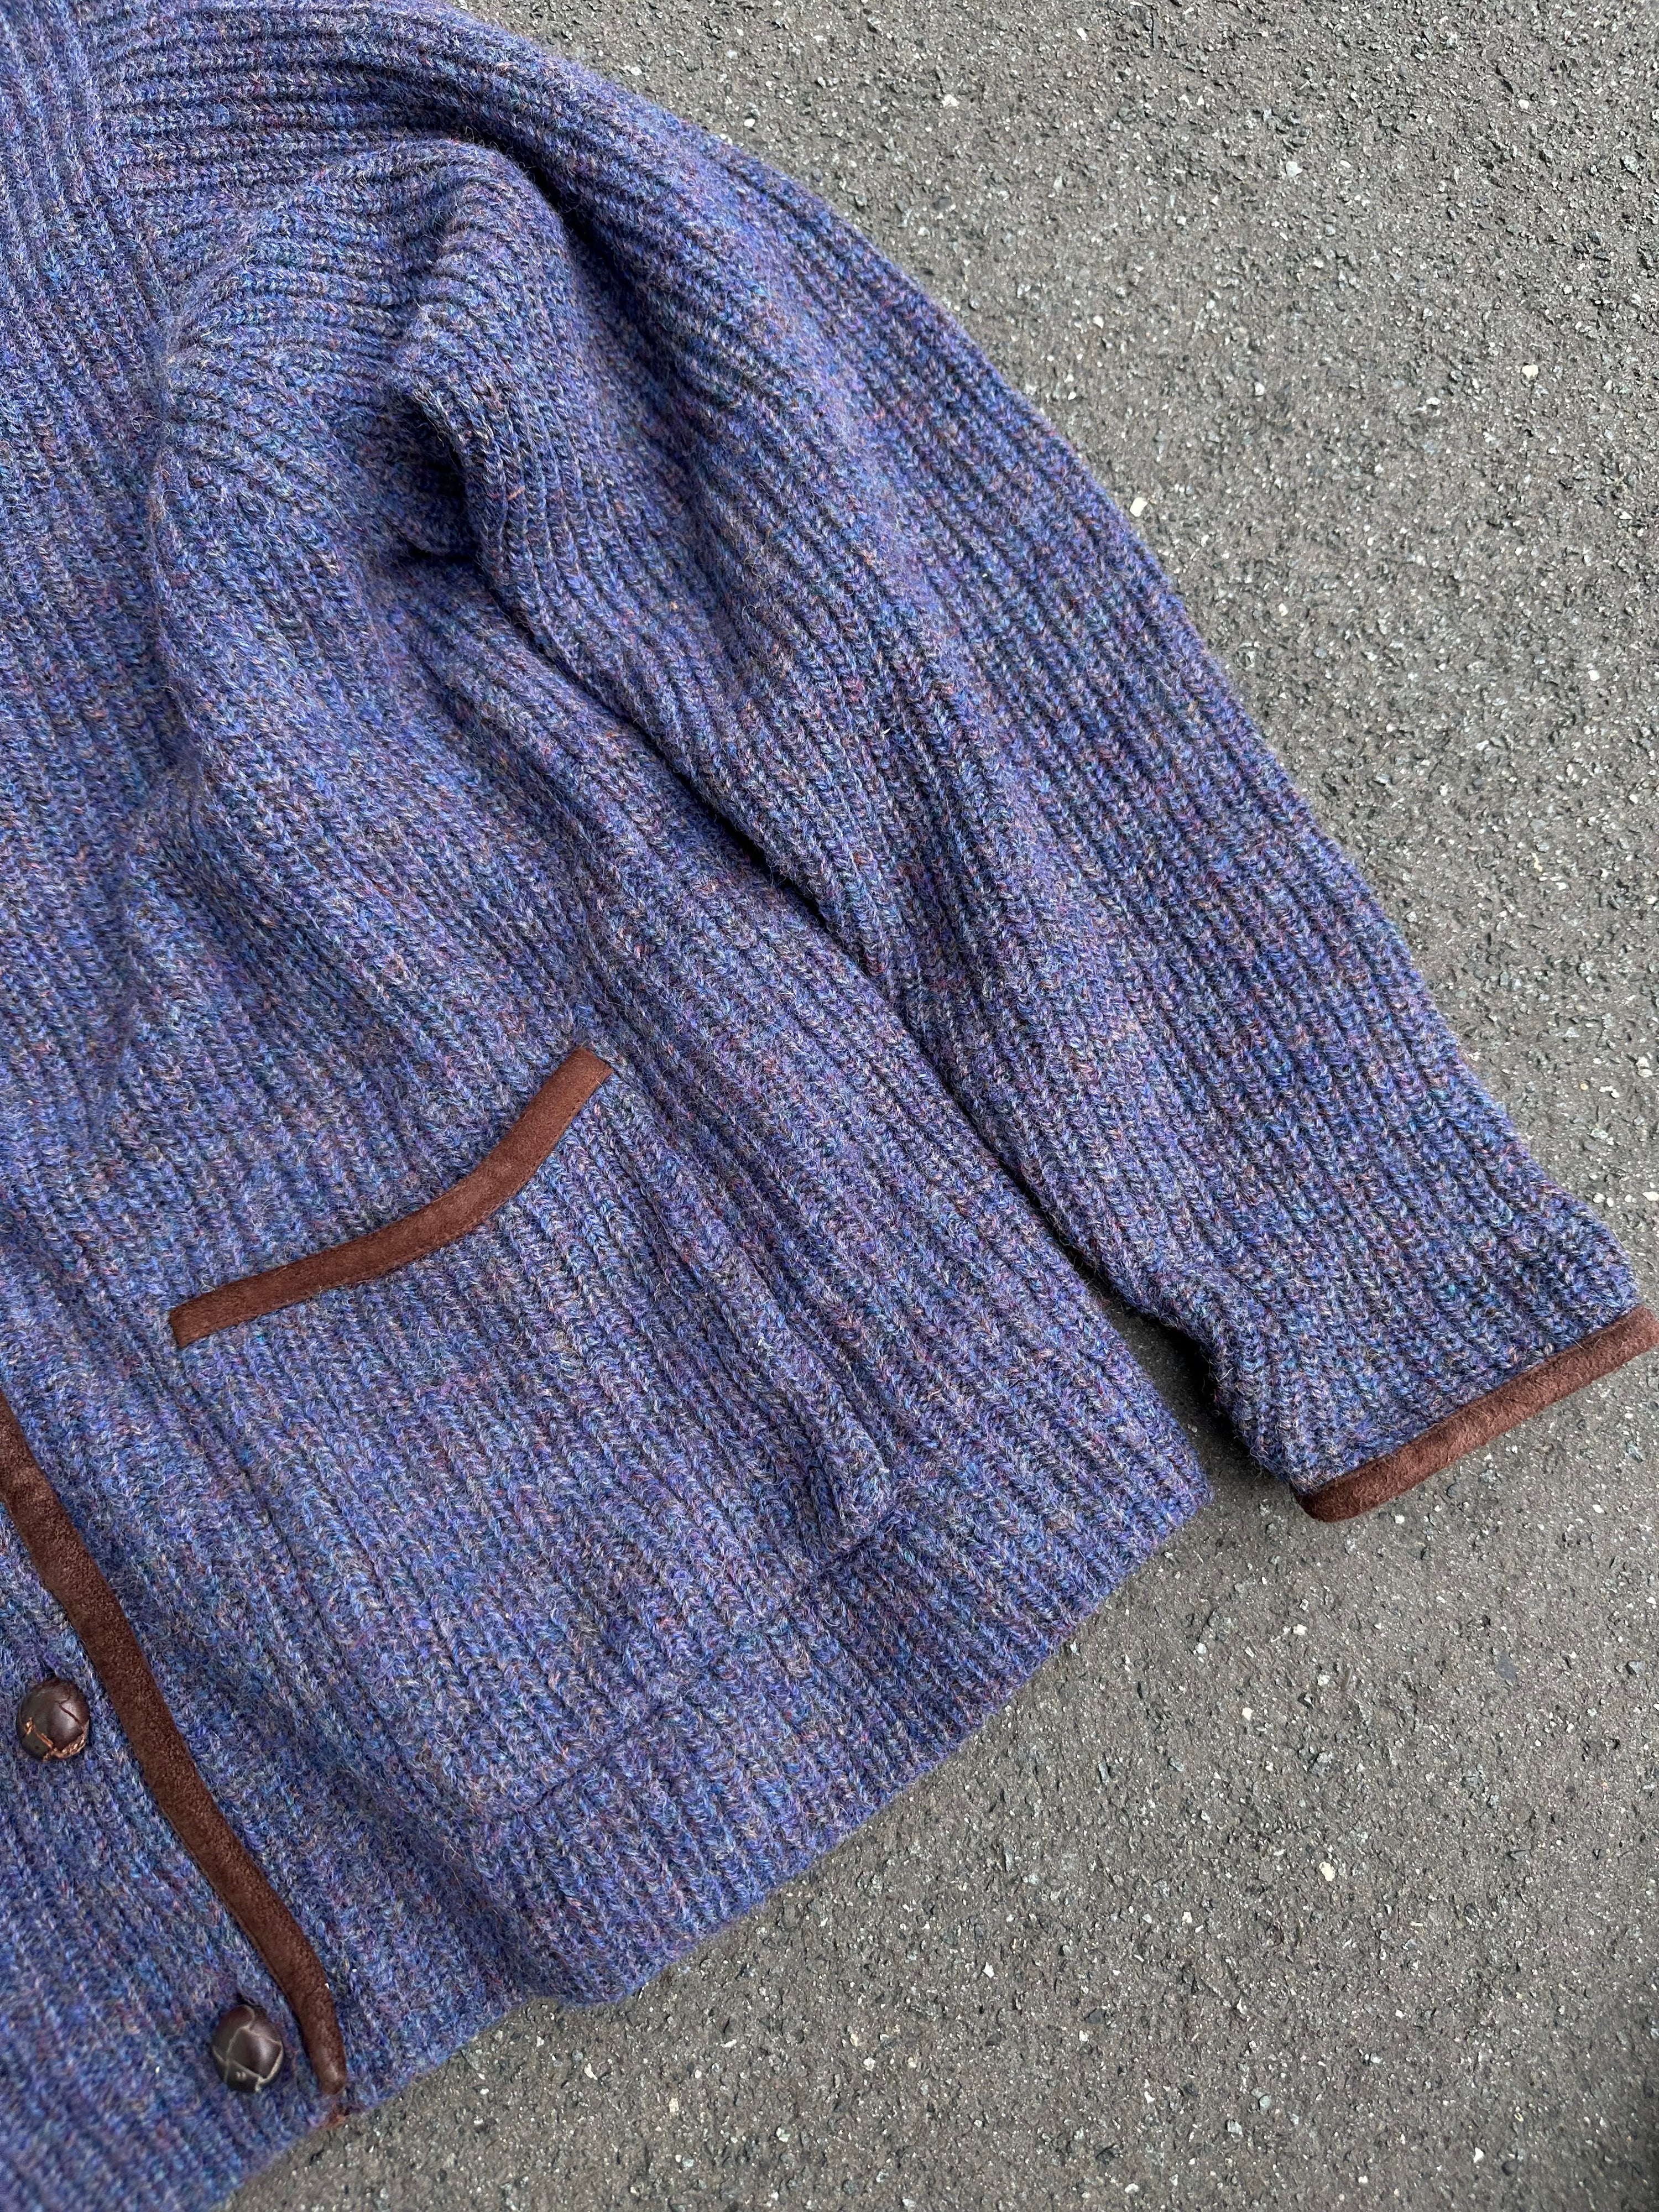 Vintage LL Bean Knit Cardigan (L)